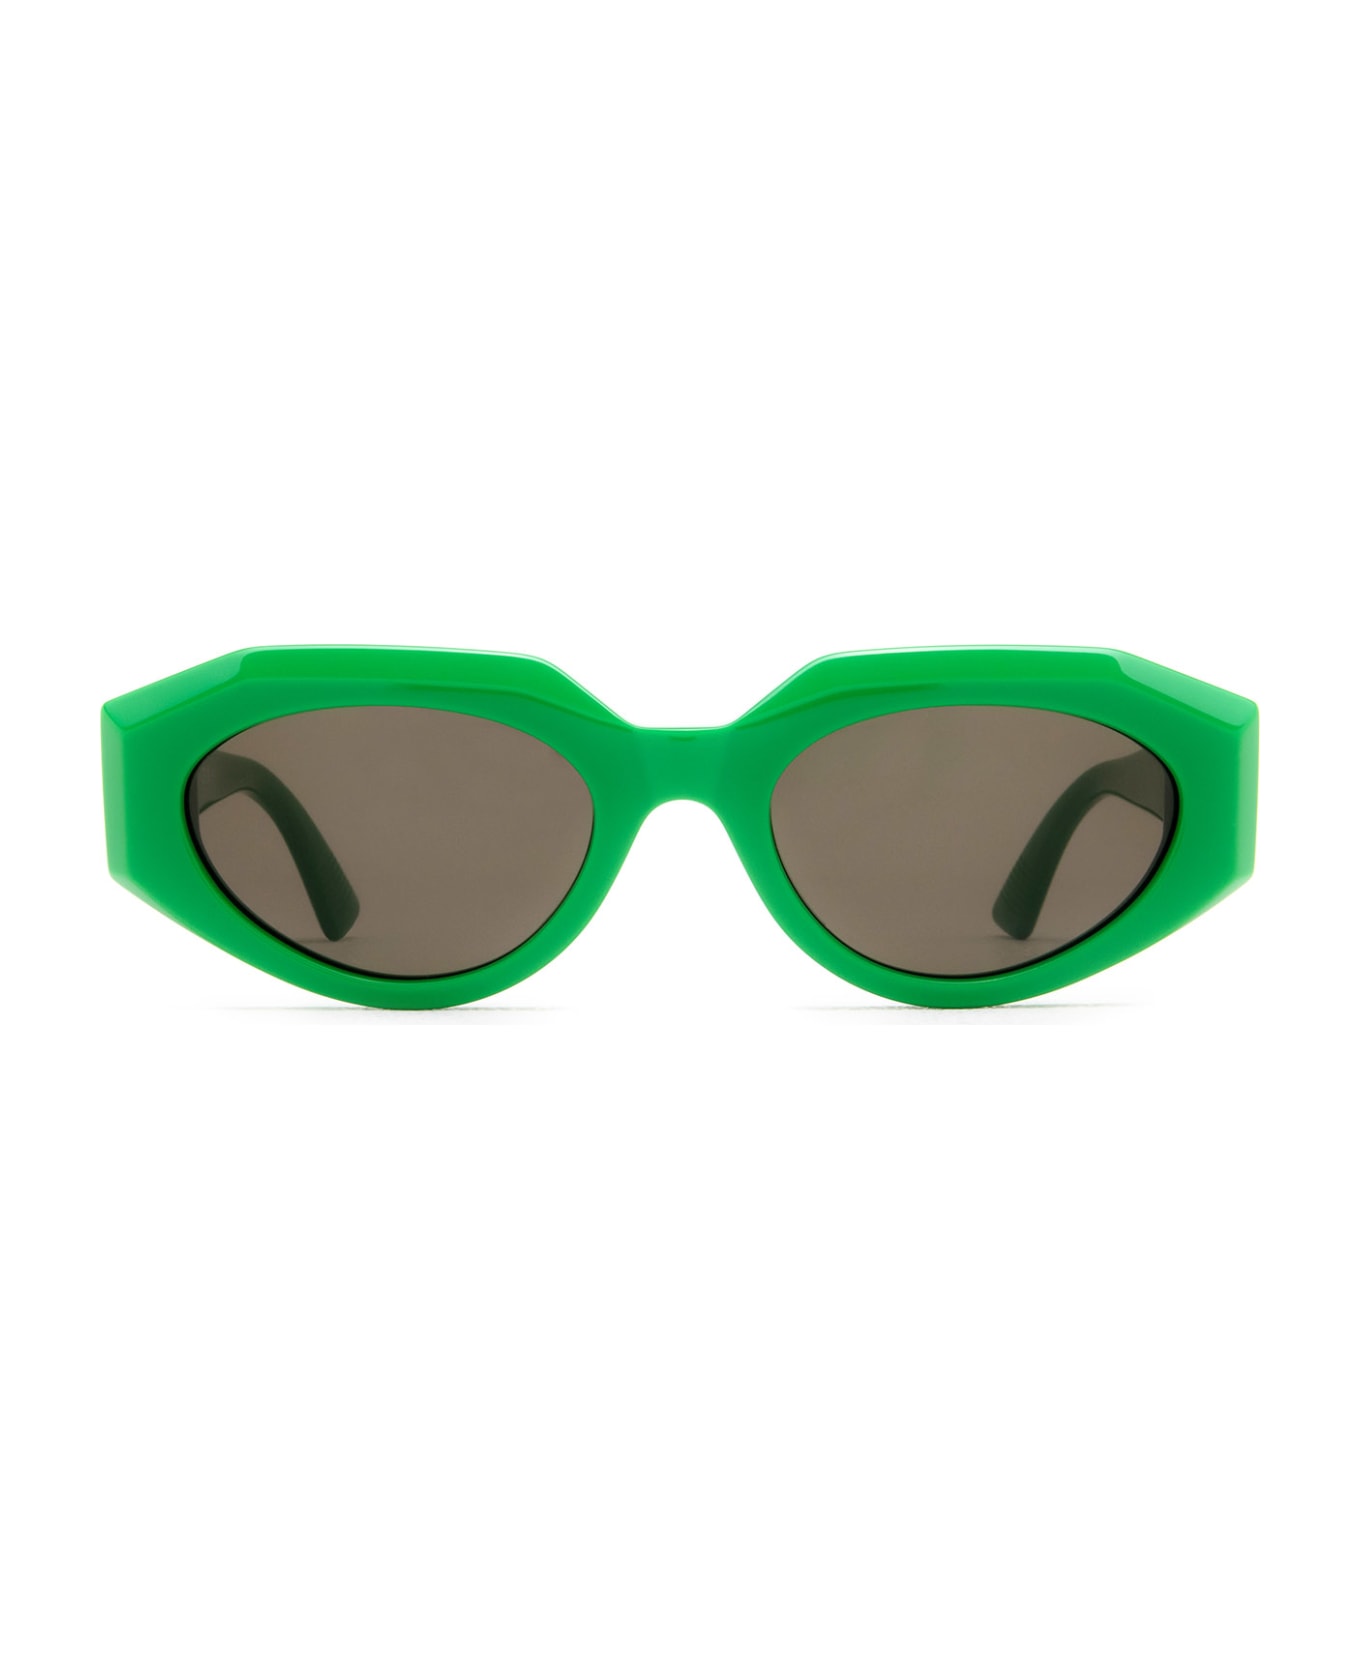 Bottega Veneta Eyewear Bv1031s Green Sunglasses - Green